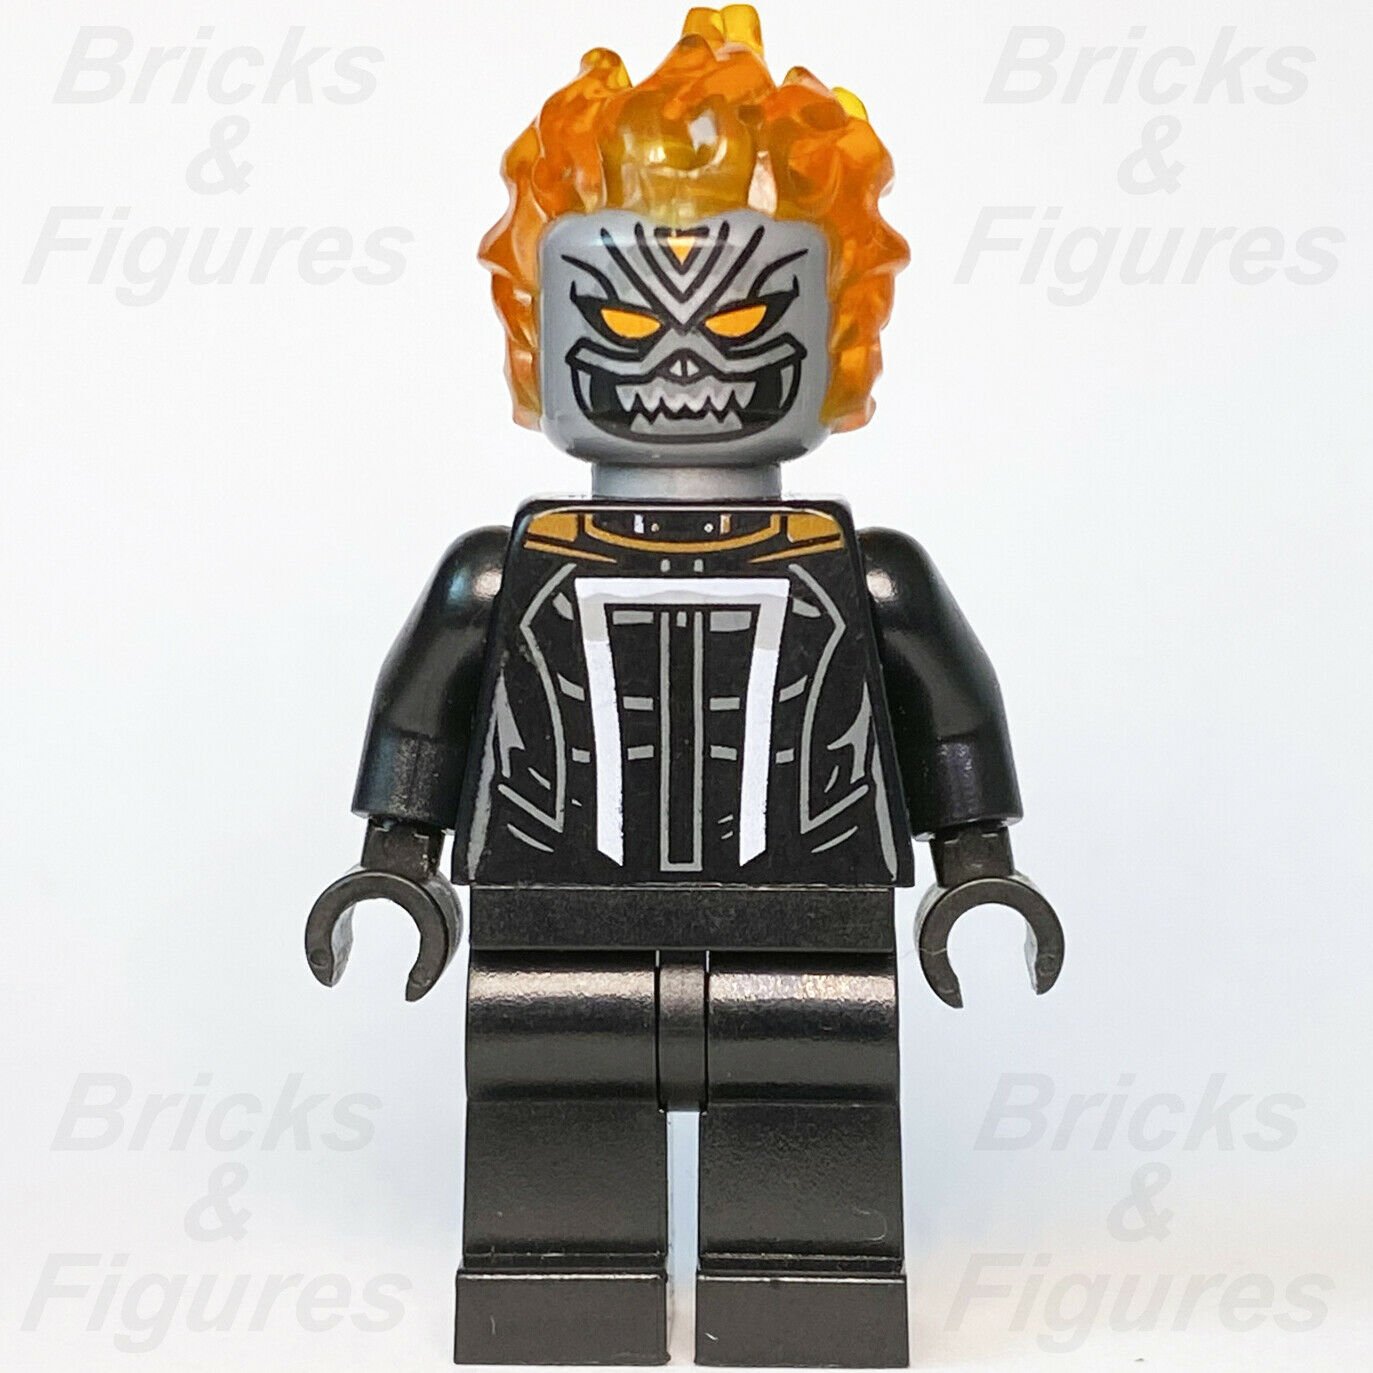 Marvel Super Heroes LEGO Ghost Rider "Johnny" Blaze Spider-Man Minifigure 76173 - Bricks & Figures